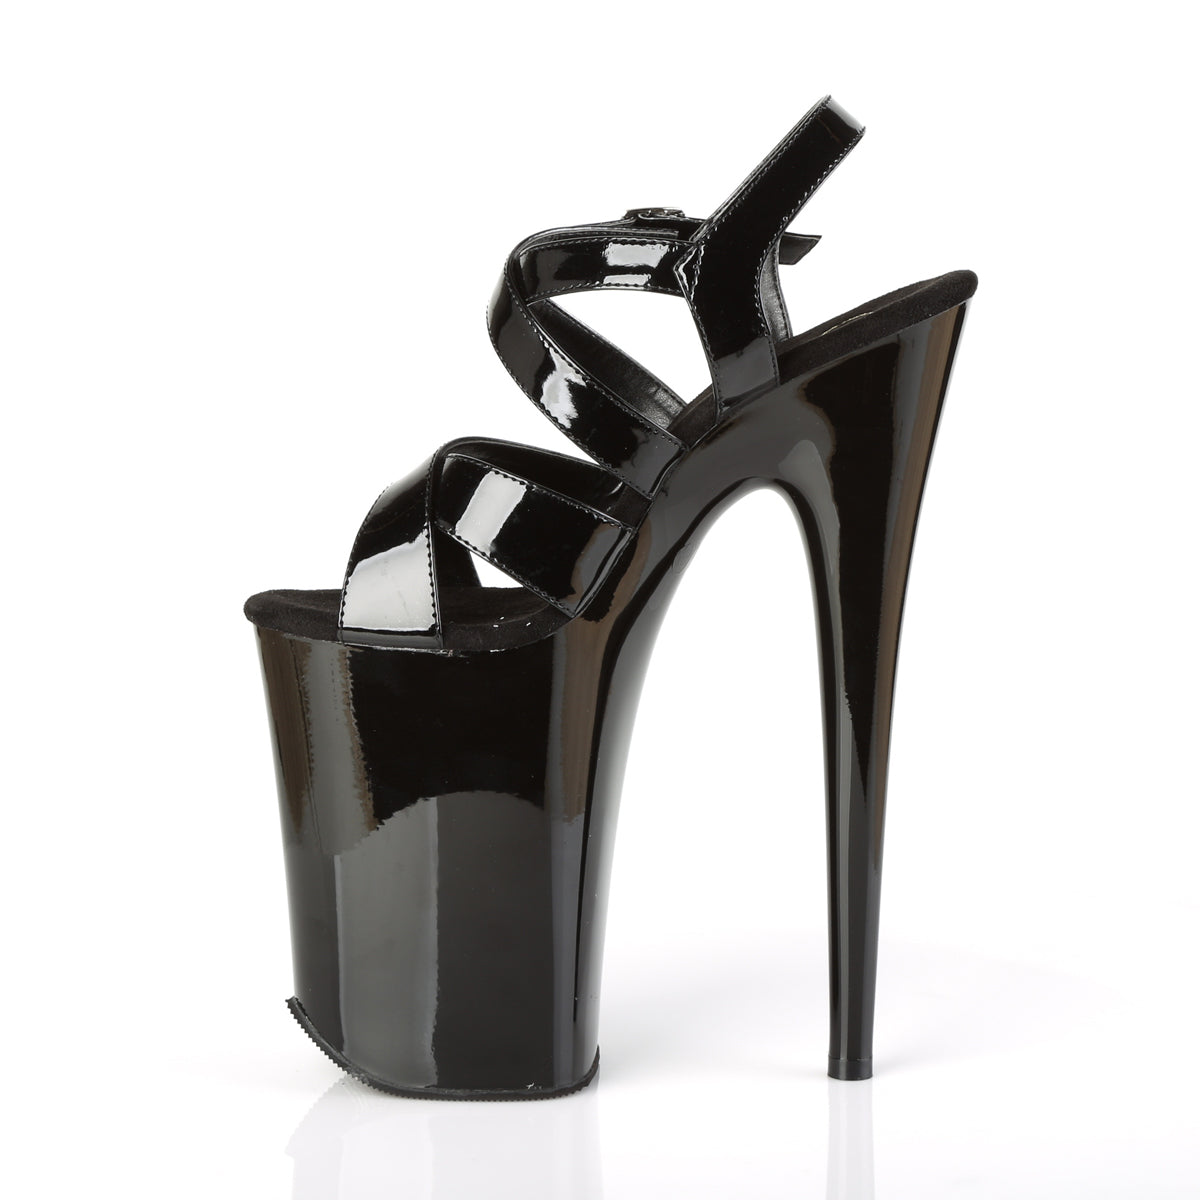 INFINITY-997 Pleaser Black Patent Platform Shoes [9 Inch High Heels]